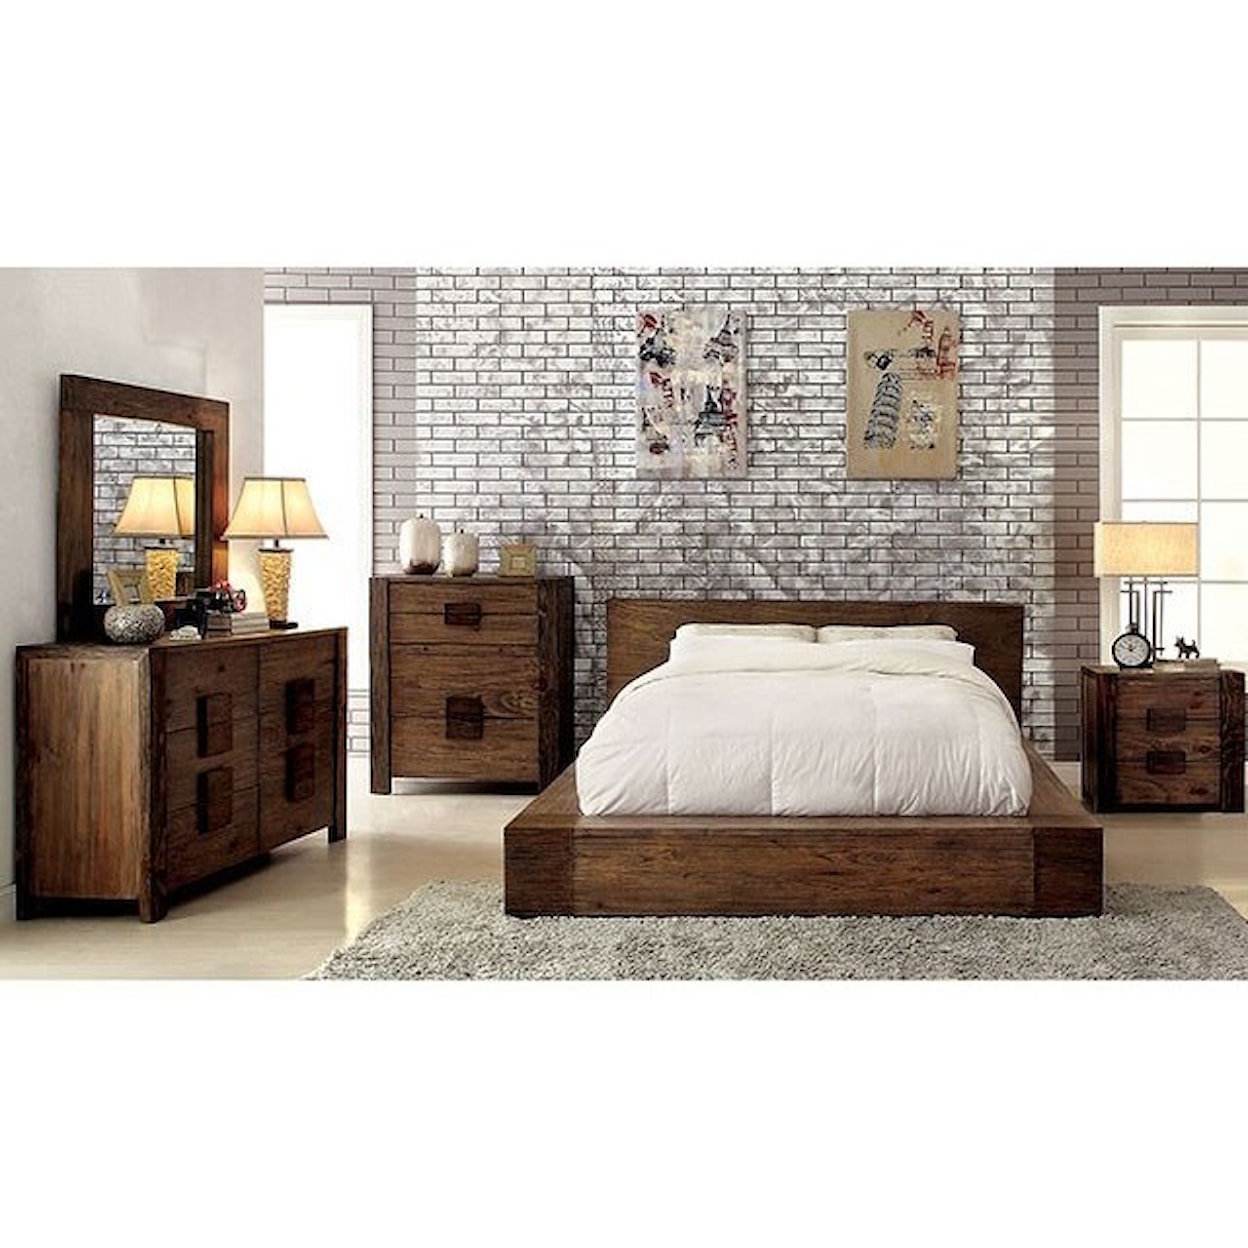 Furniture of America Janeiro California King Bed